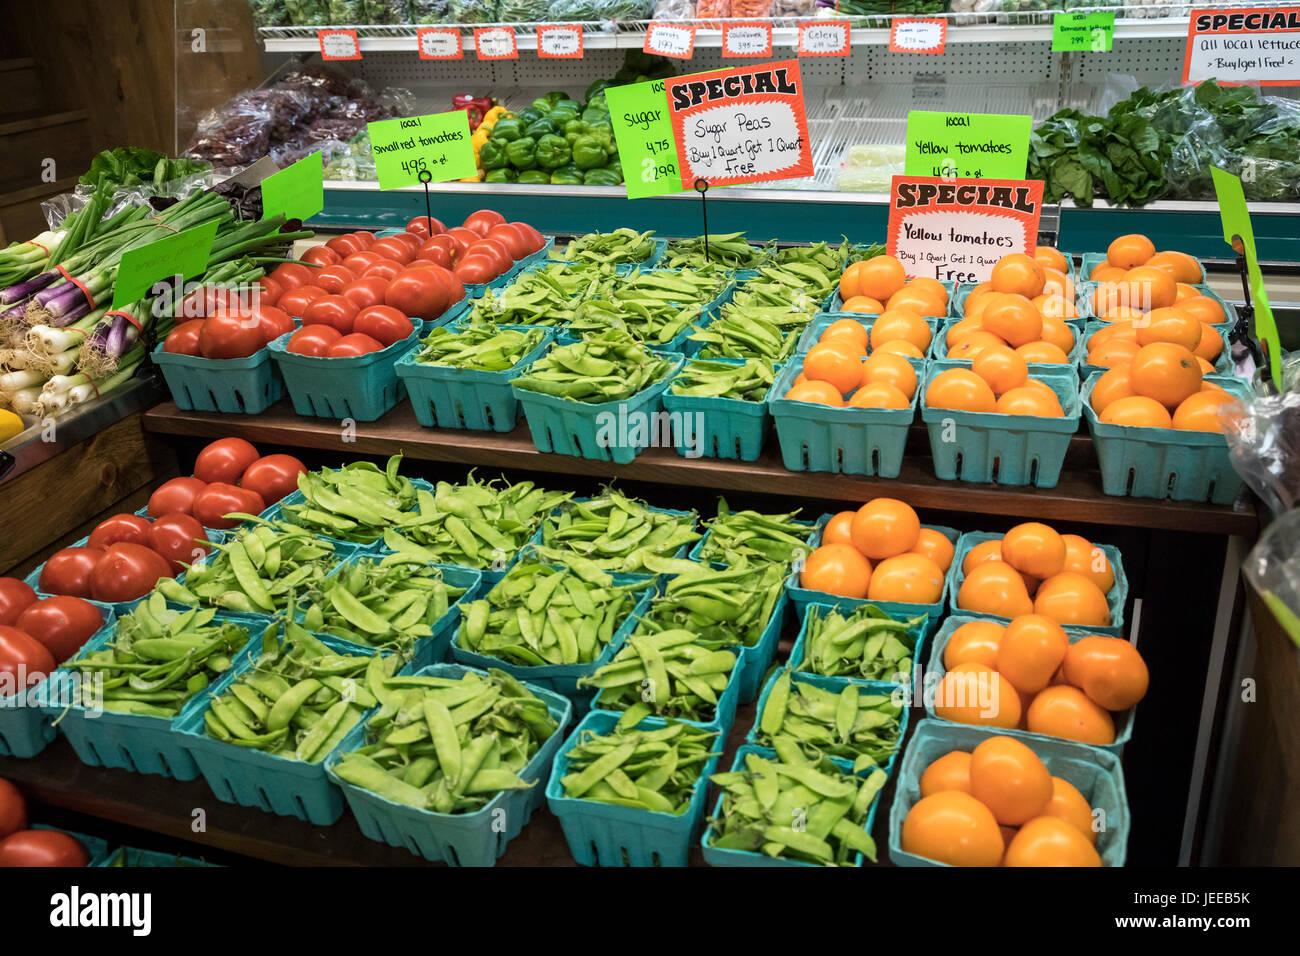 Shrewsbury, Pennsylvania - Produce on sale at the Markets at Shrewsbury, an Amish farmers market in York County, Pennsylvania. Stock Photo